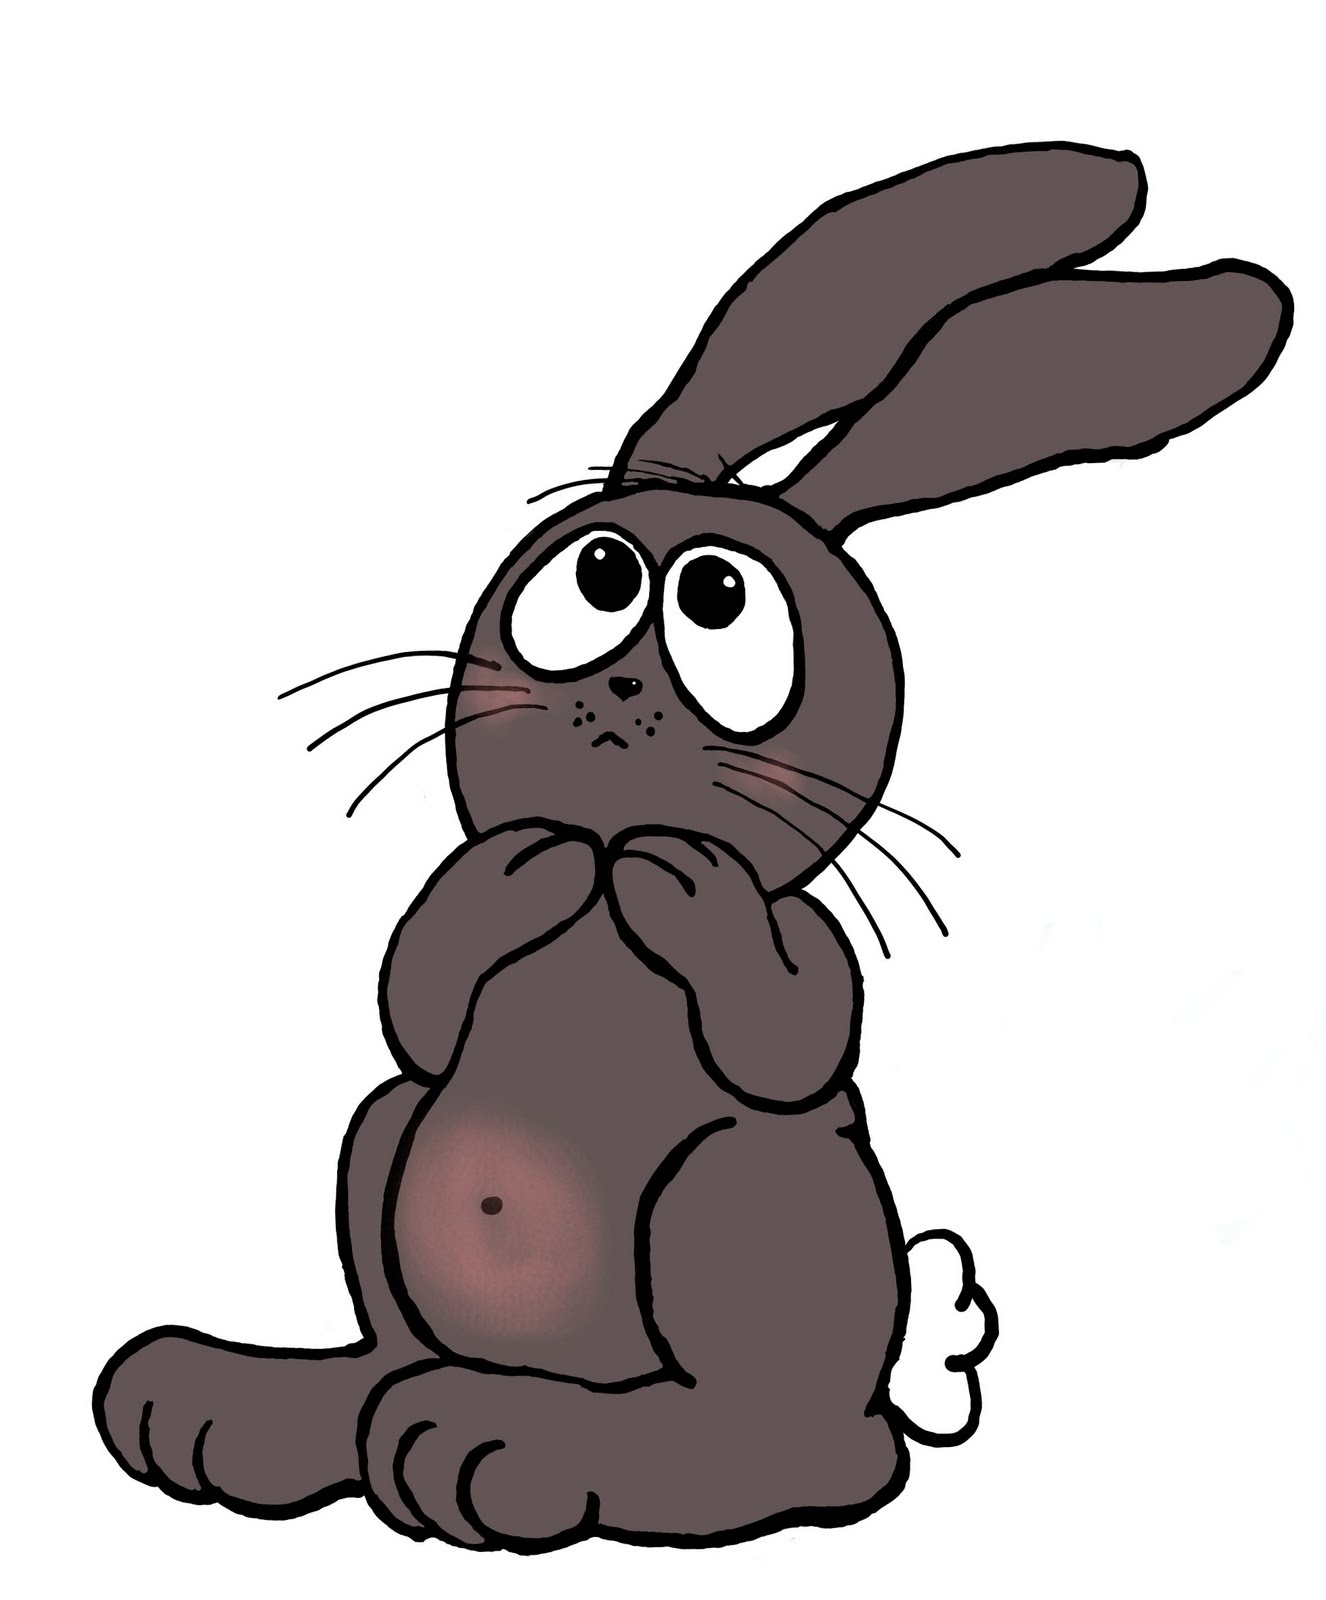 Rabbit Cartoon Images - ClipArt Best